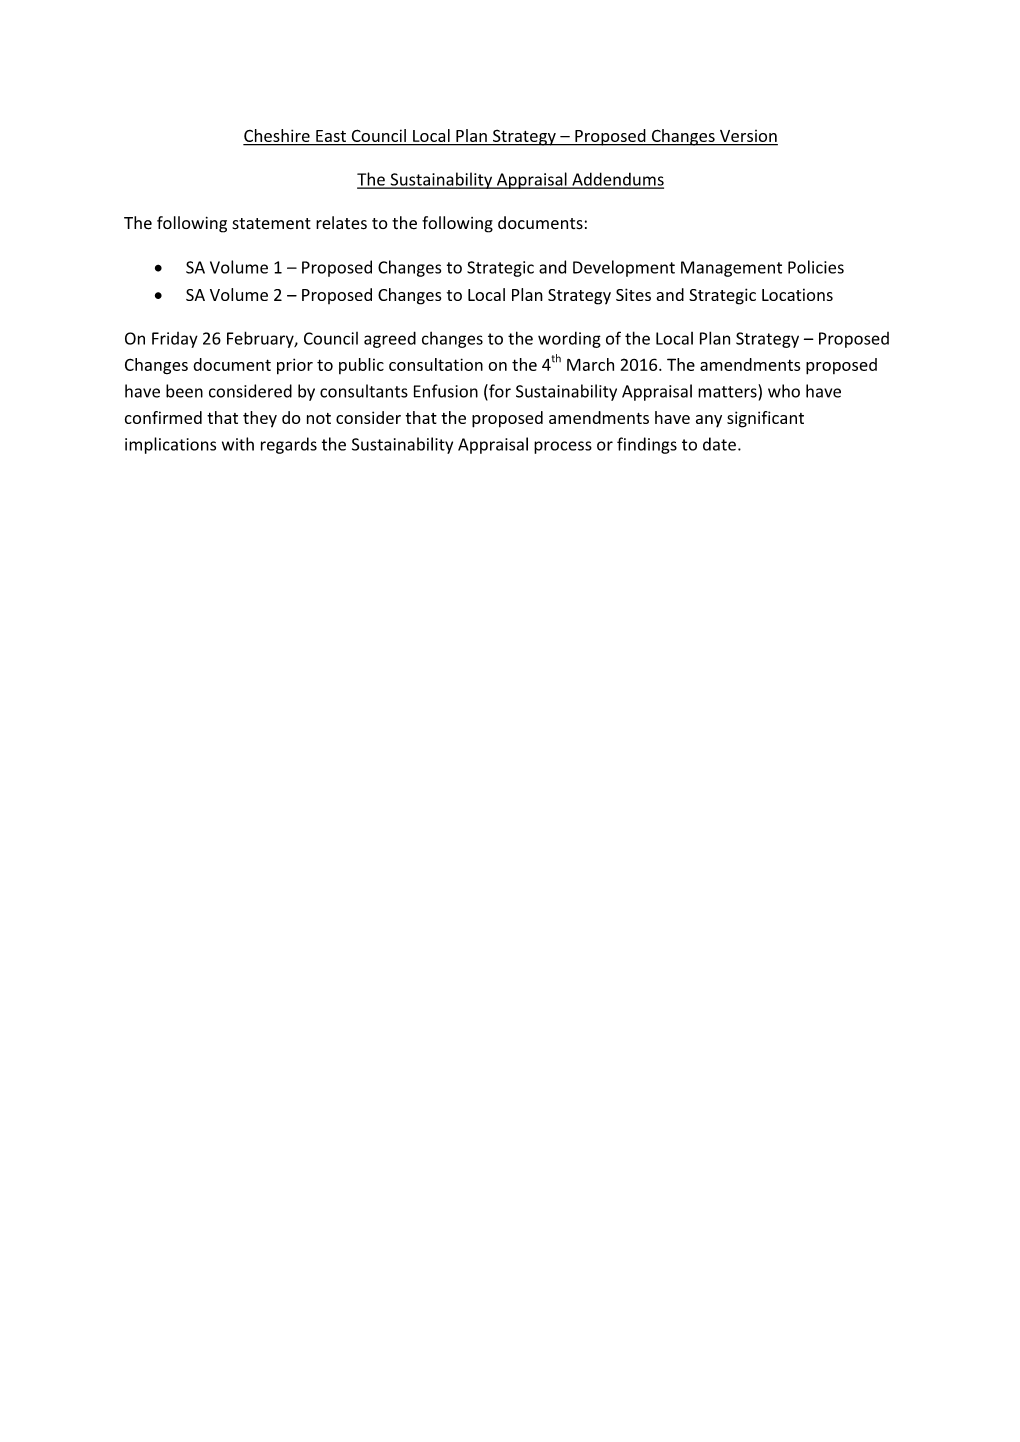 Sustainability (Integrated) Appraisal Addendum Report Volume 1